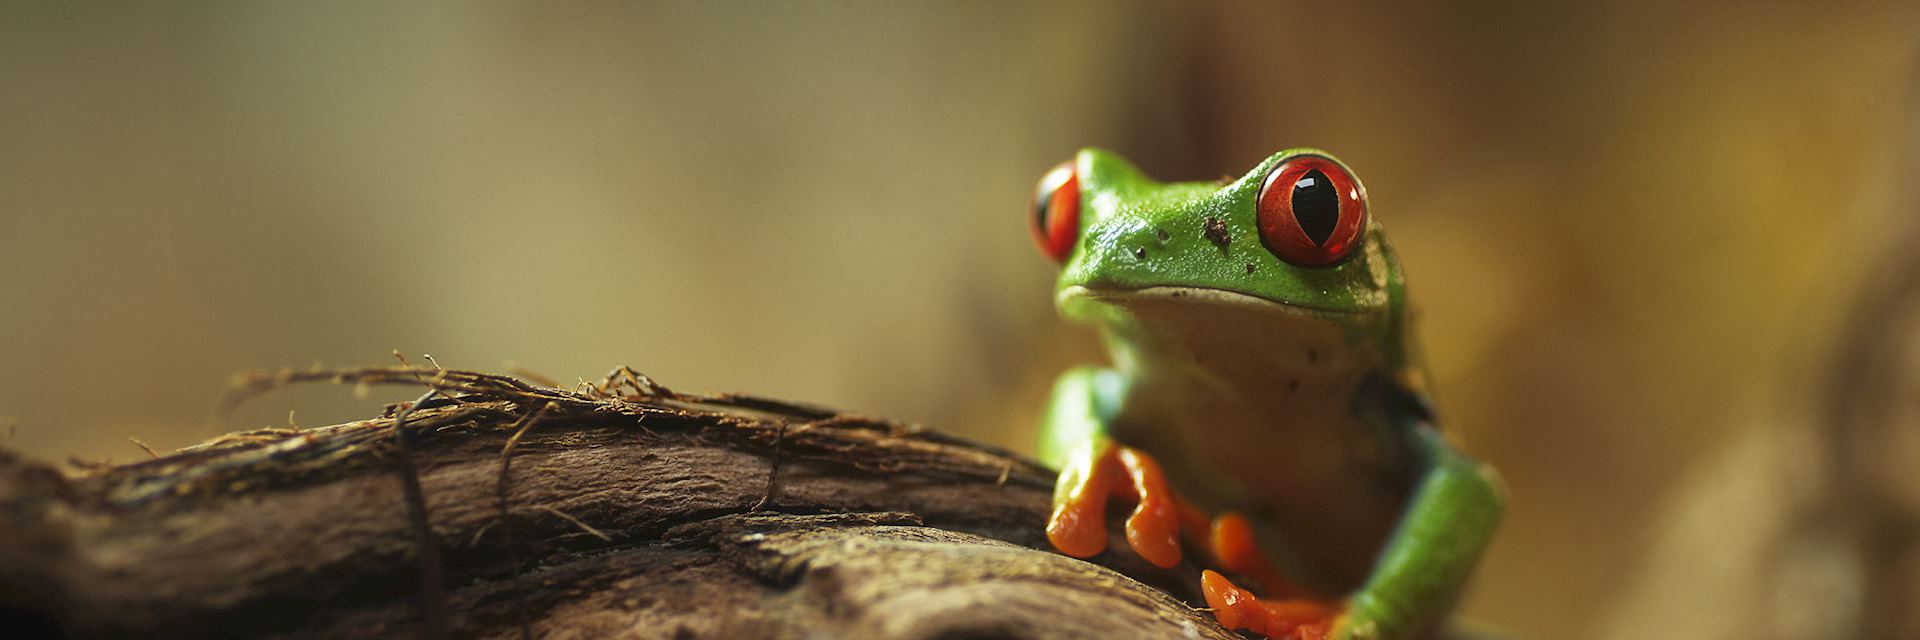 Red-eyed tree frog, Nicaragua